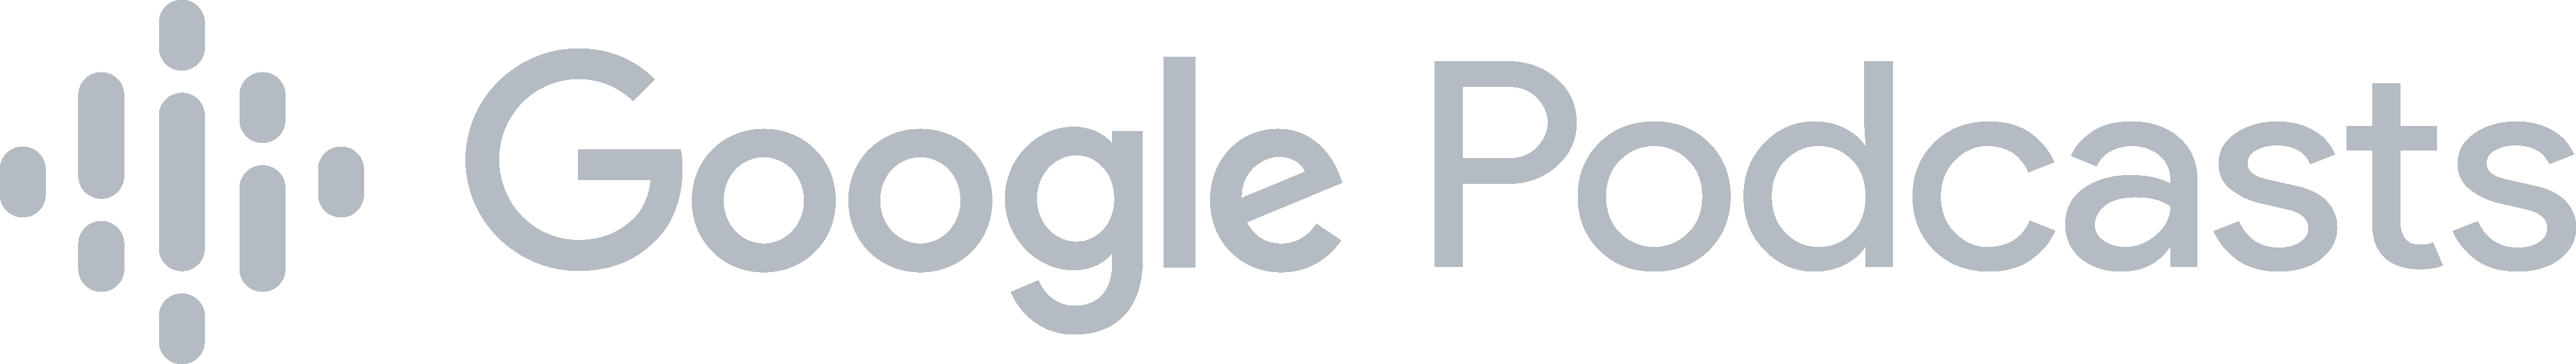 google podcasts logo